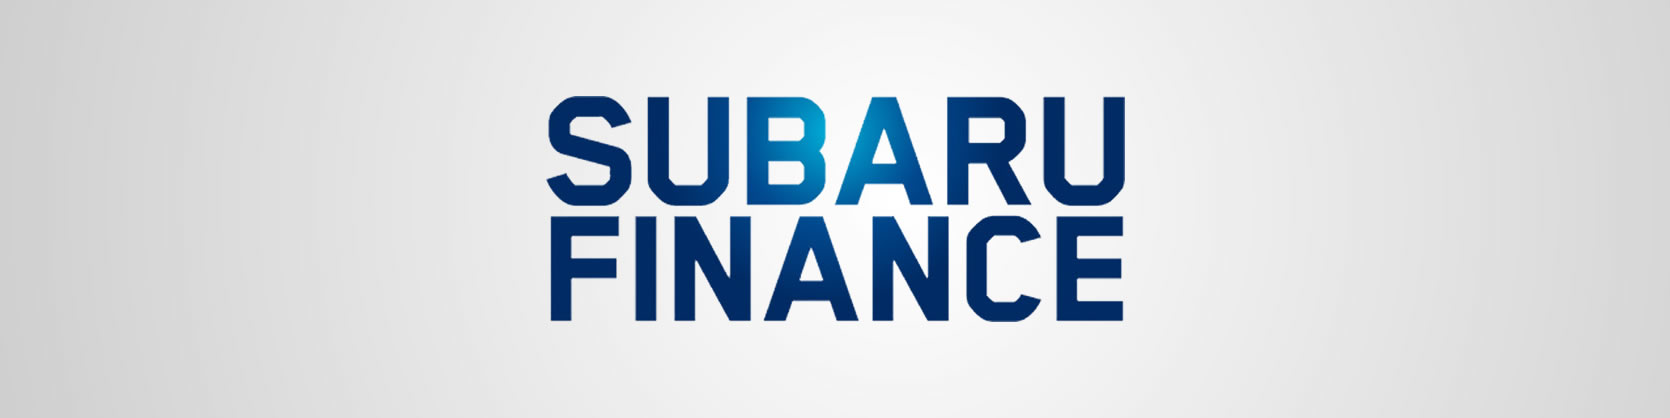 car finance perth, New Car Finance Perth News: 2019 Subaru BRZ Japanese Reveal Details